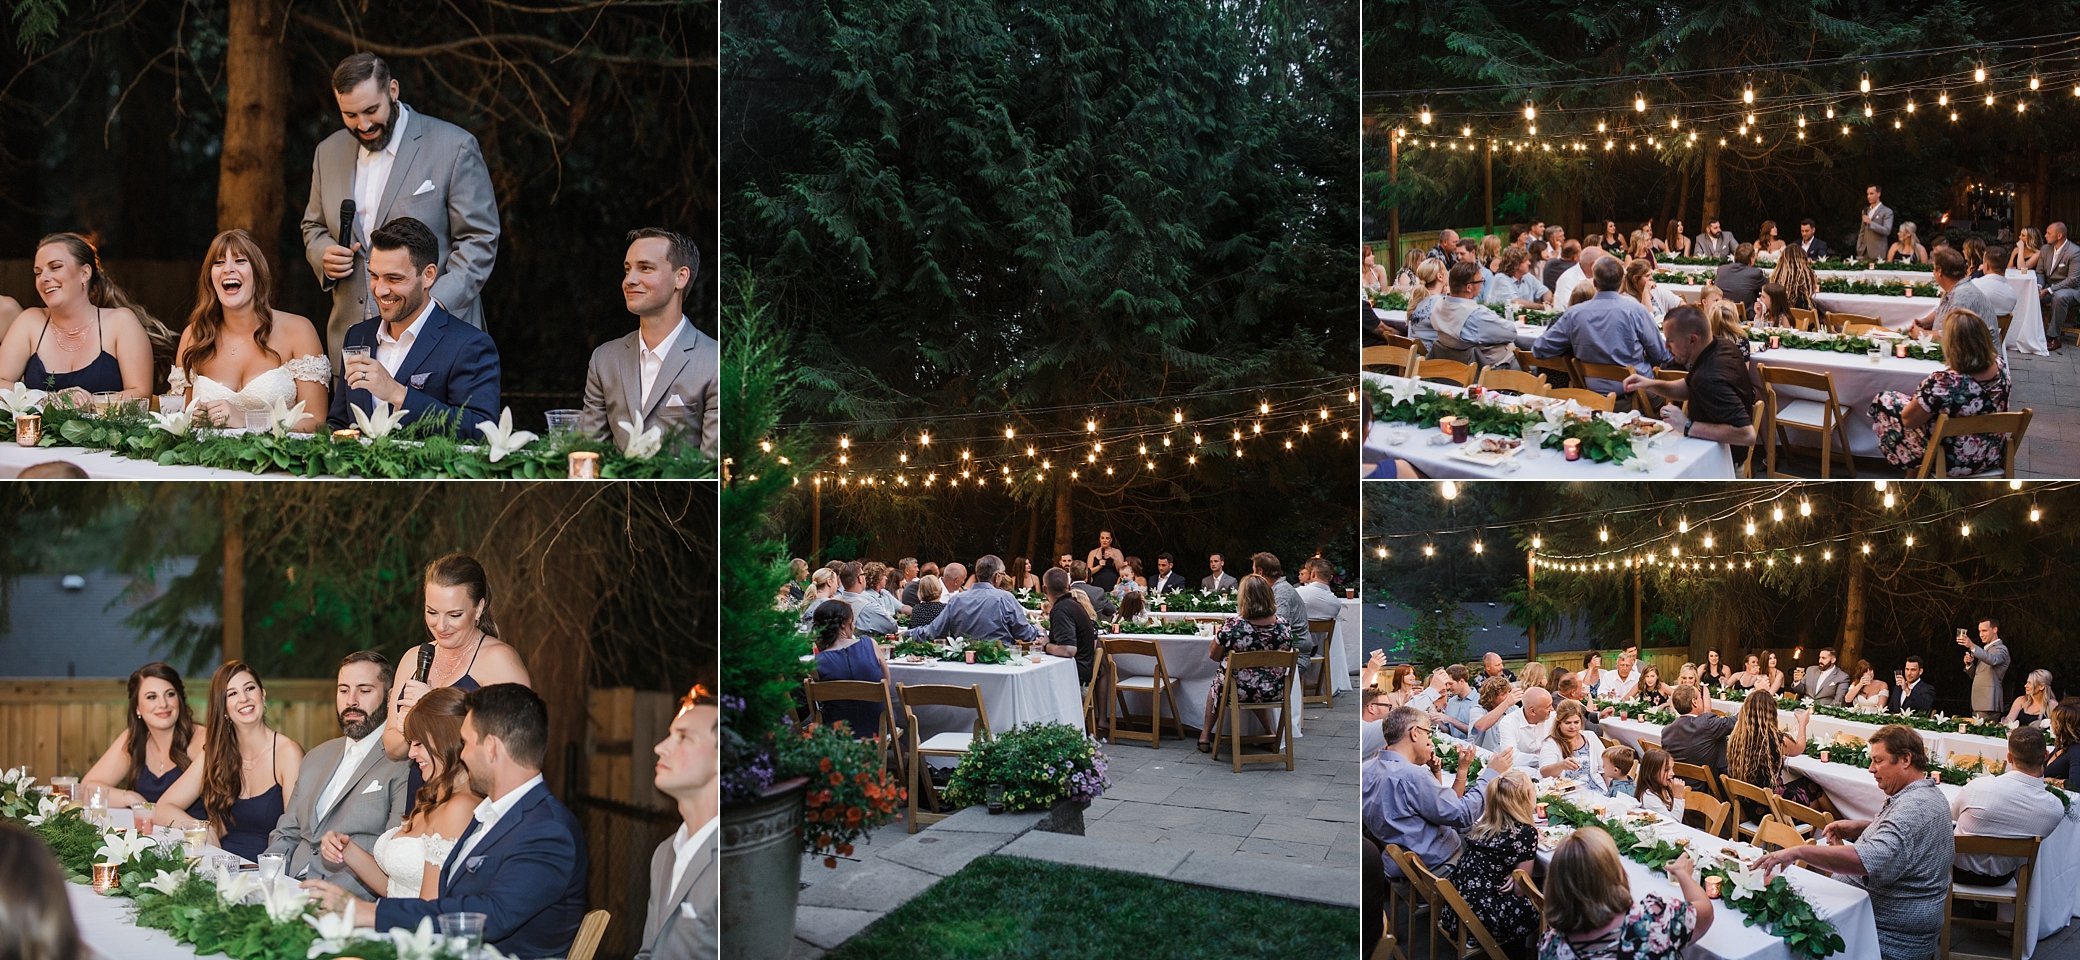 Tacoma backyard wedding reception toasts | Megan Montalvo Photography